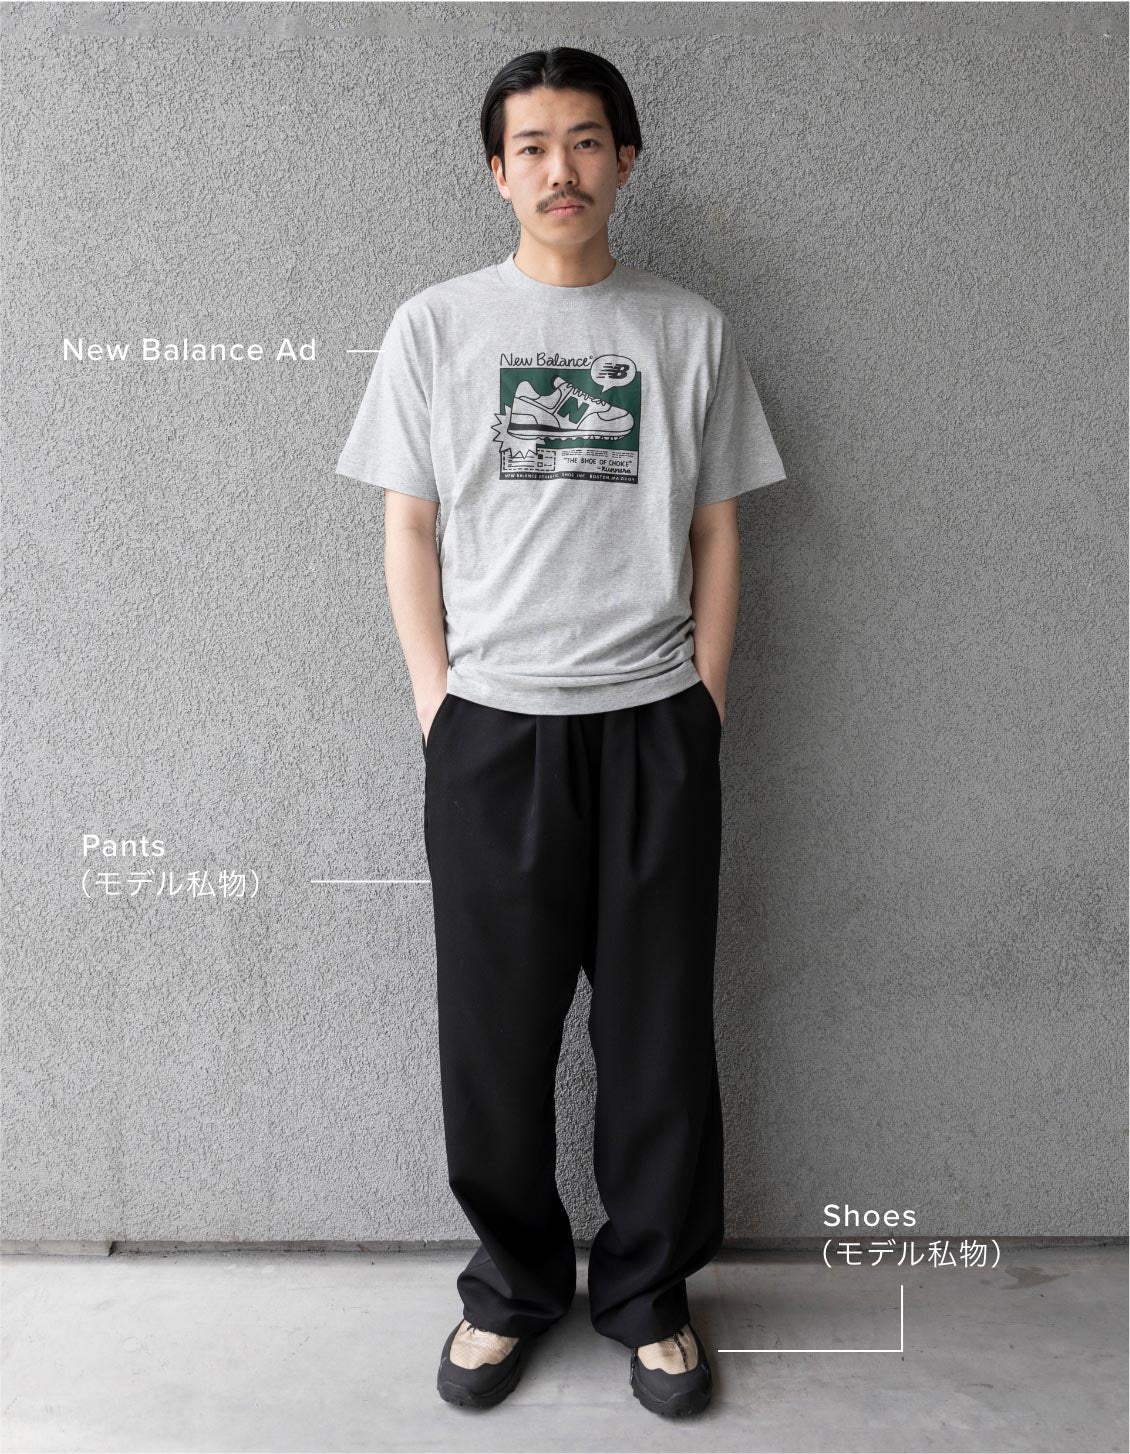 Ryo Ishikawa コーディネート詳細 Tシャツ:New Balance Ad, Pants:モデル私物, Shoes:モデル私物